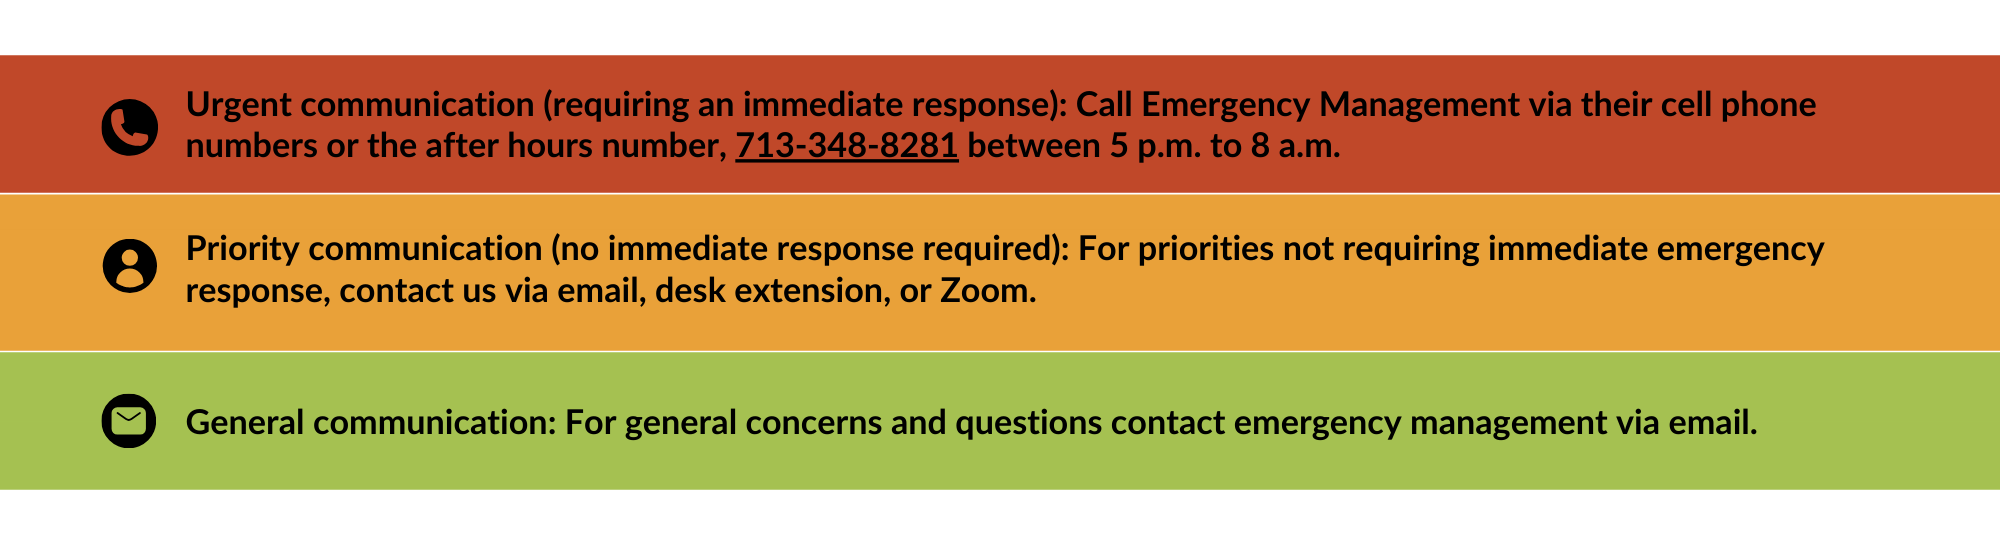 Emergency Management Communication Standards table